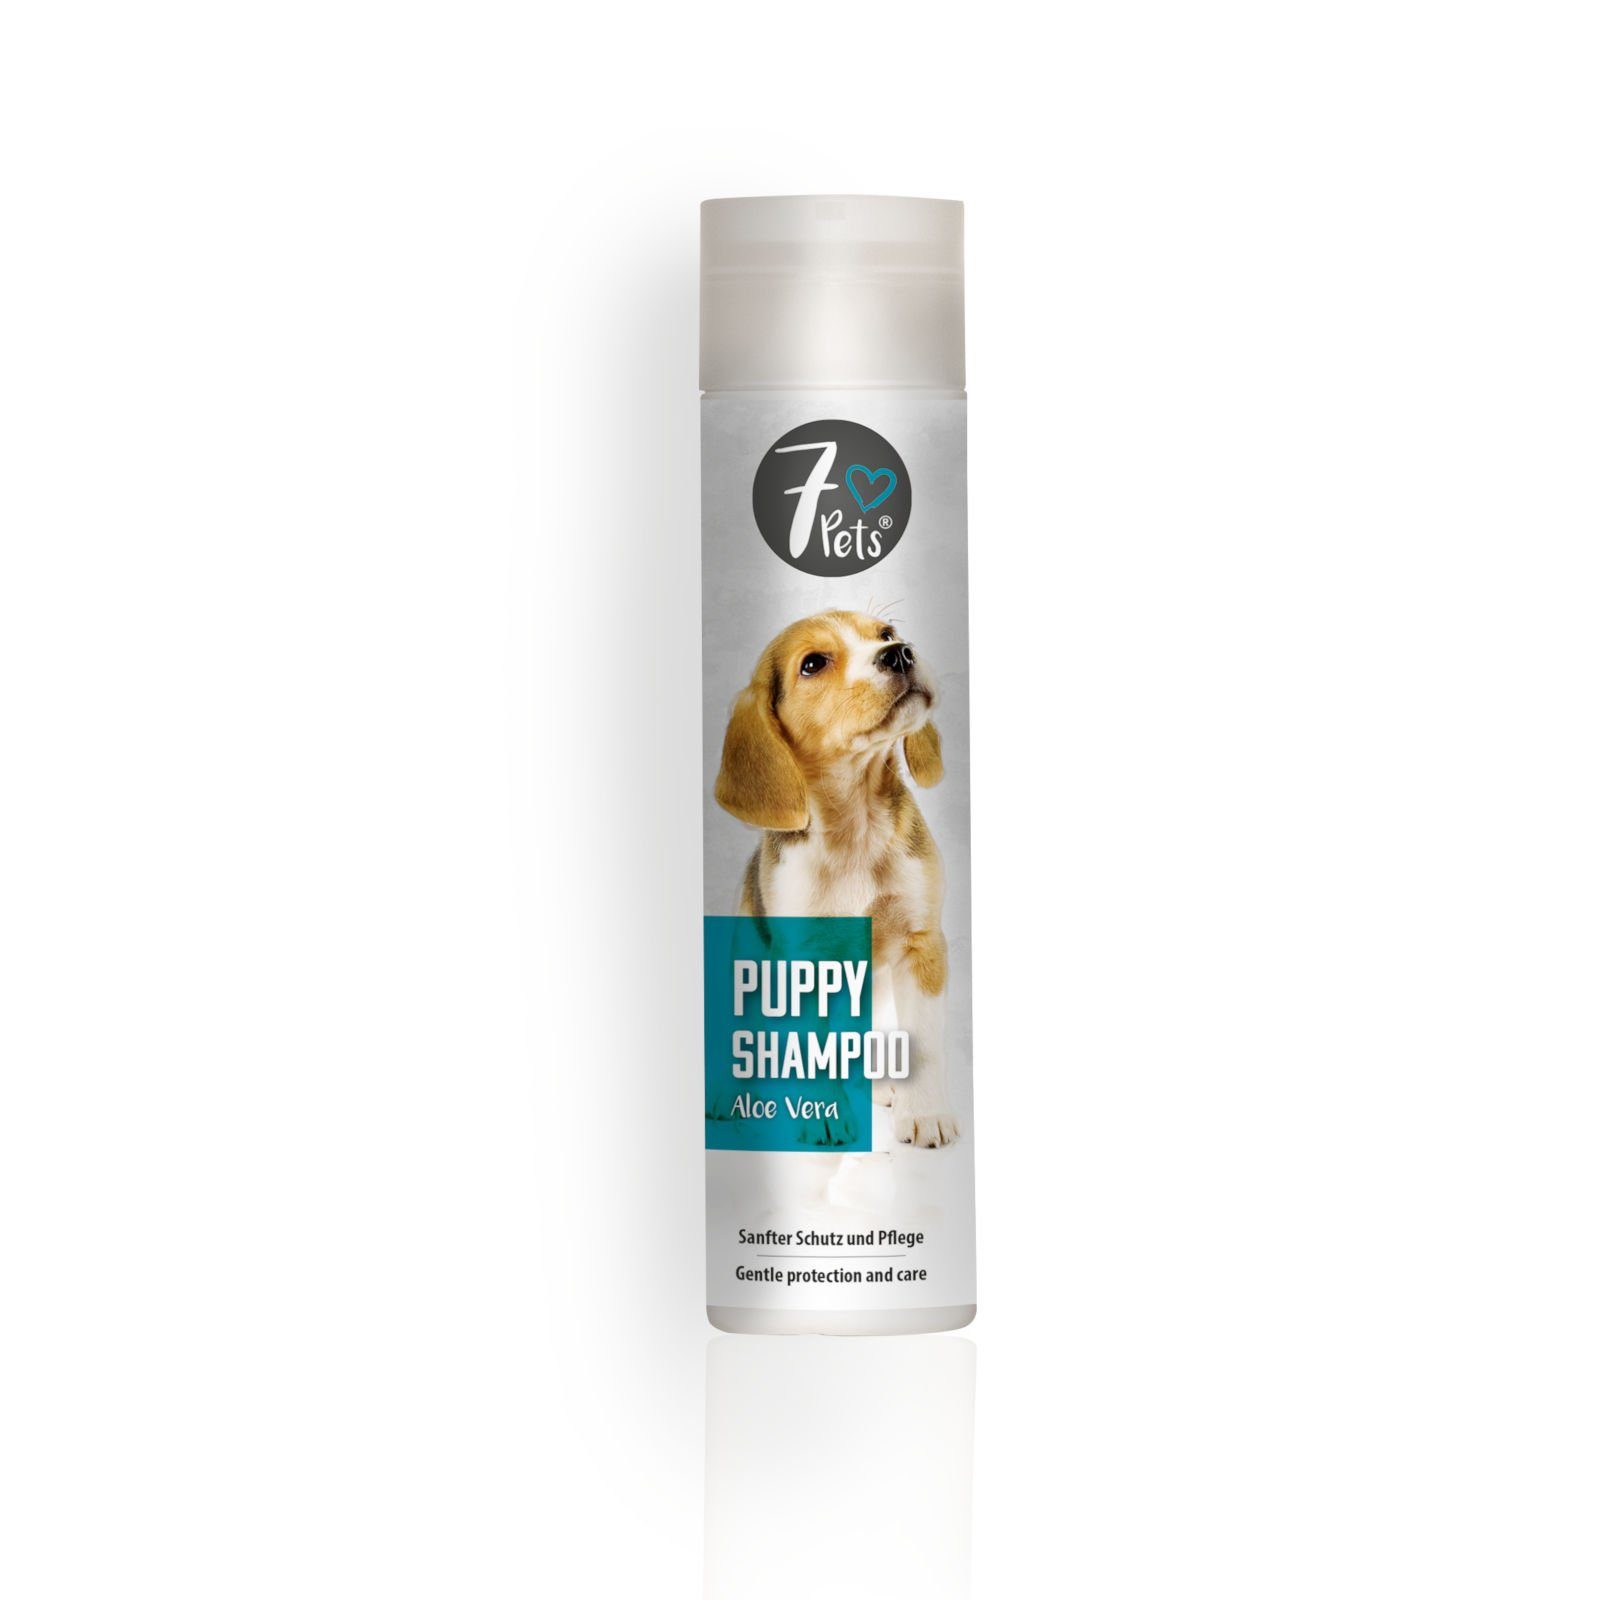 7Pets Tiershampoo 7Pets Sensitive Shampoo - 250 ml - für Welpen und sensible Haut